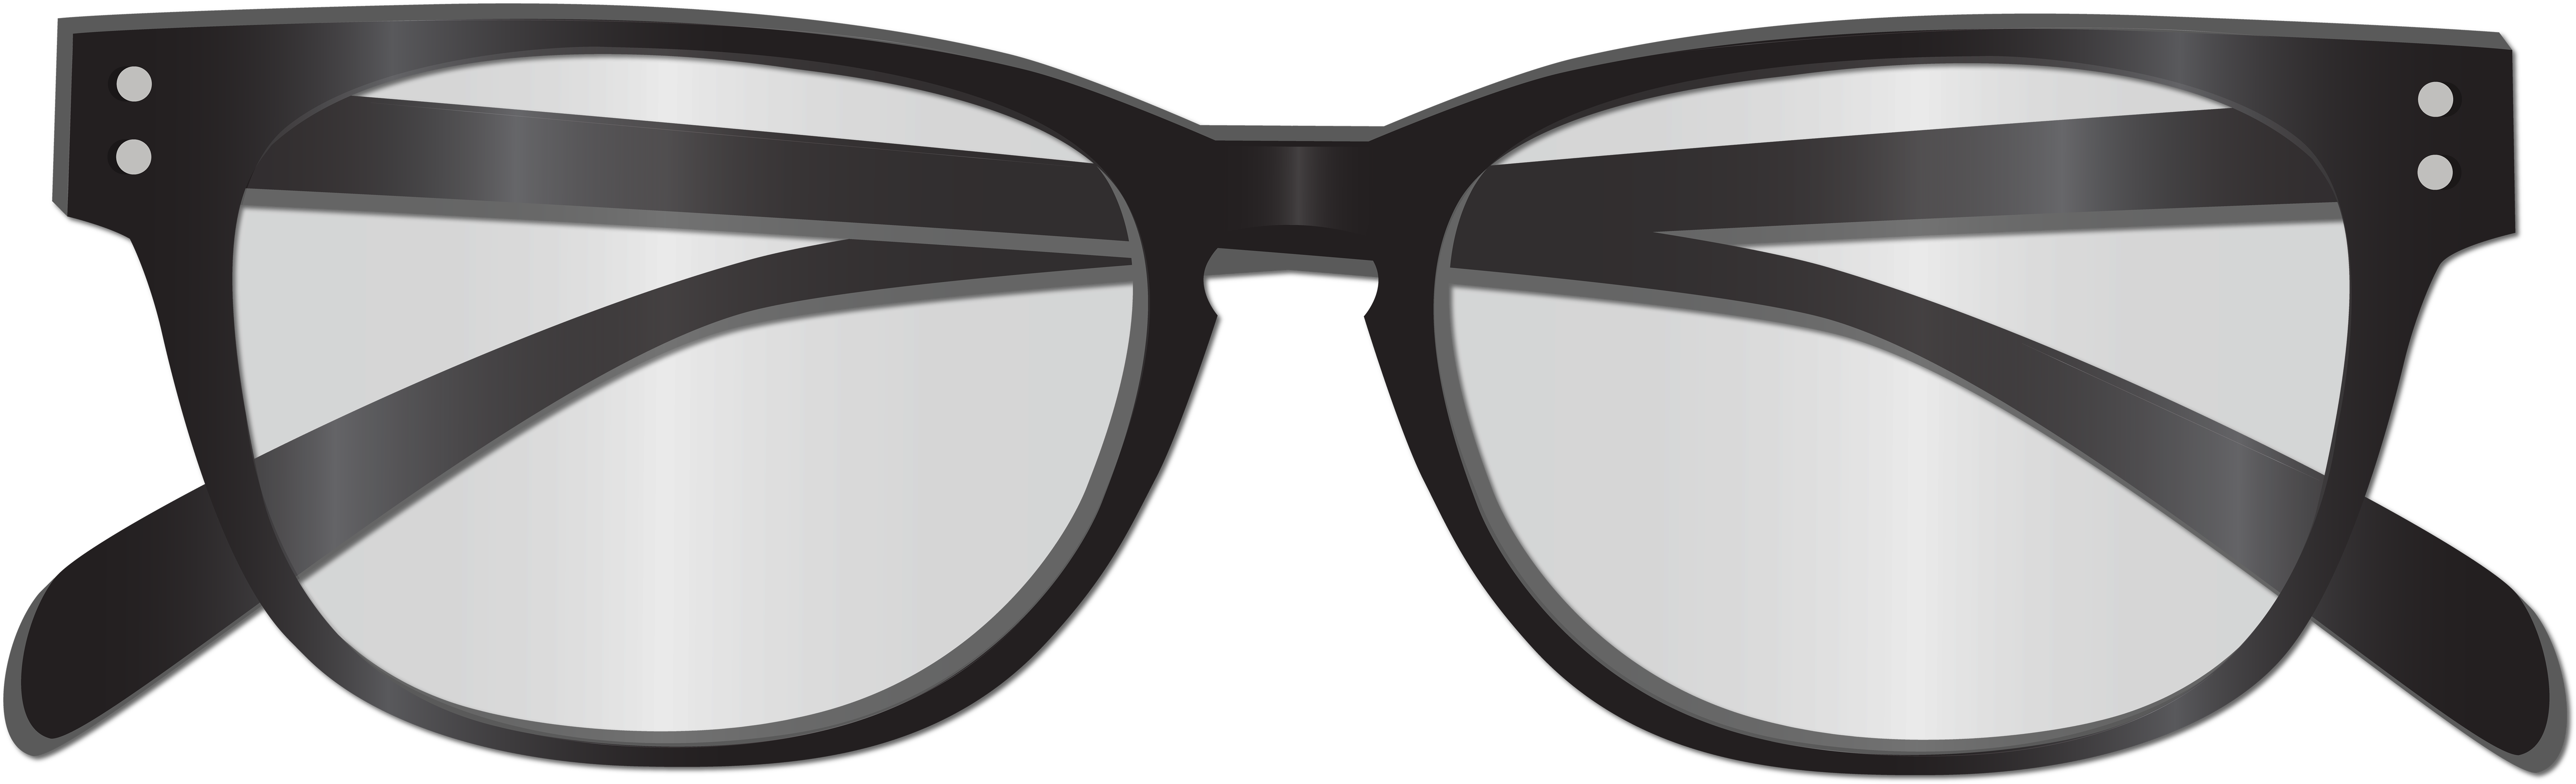 Black Classic Eyeglasses PNG